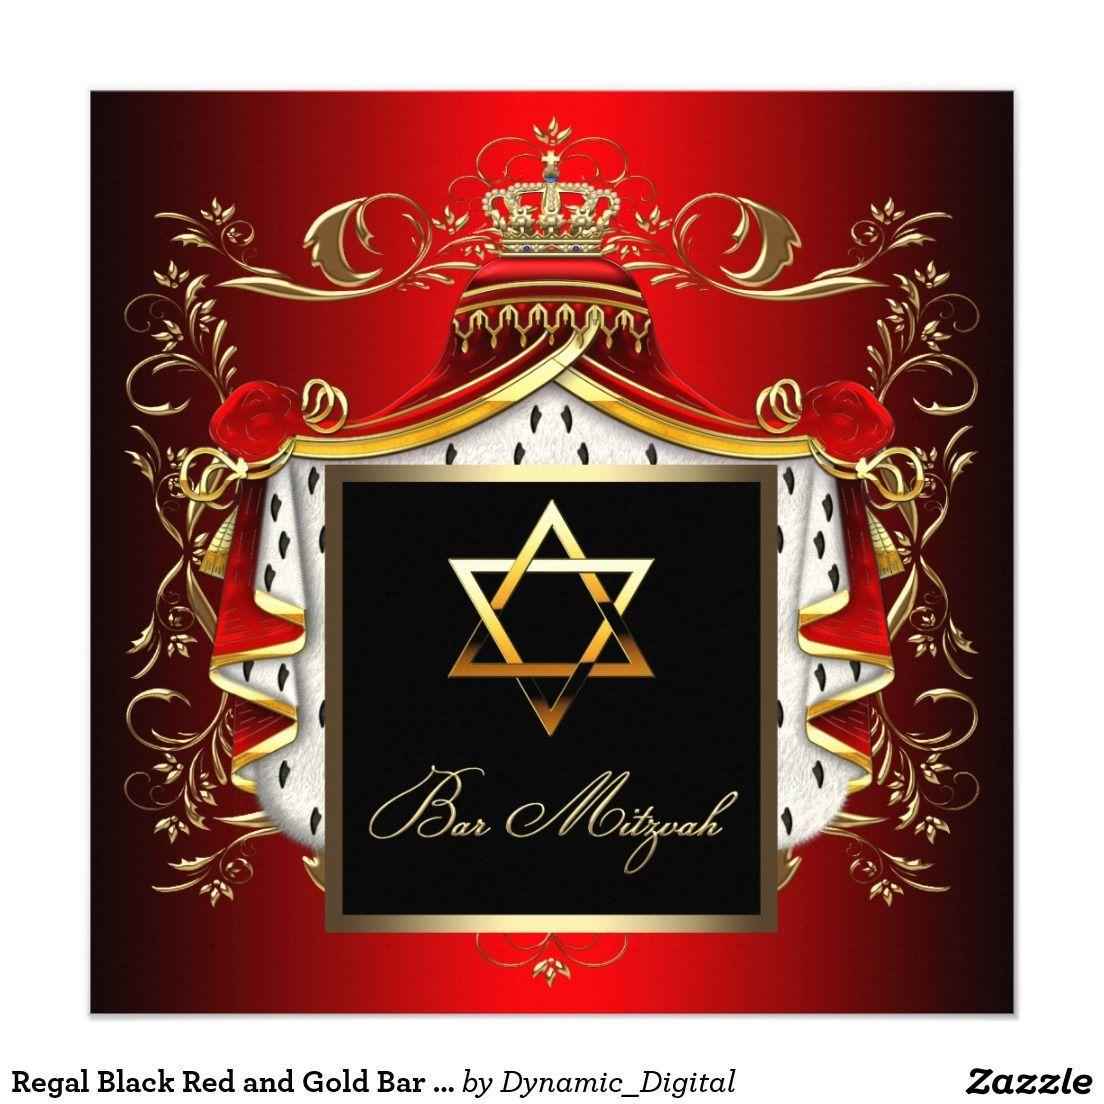 Red Black and Gold Bat Logo - Regal Black Red and Gold Bar Mitzvah Invitation. Bar Mitzvah